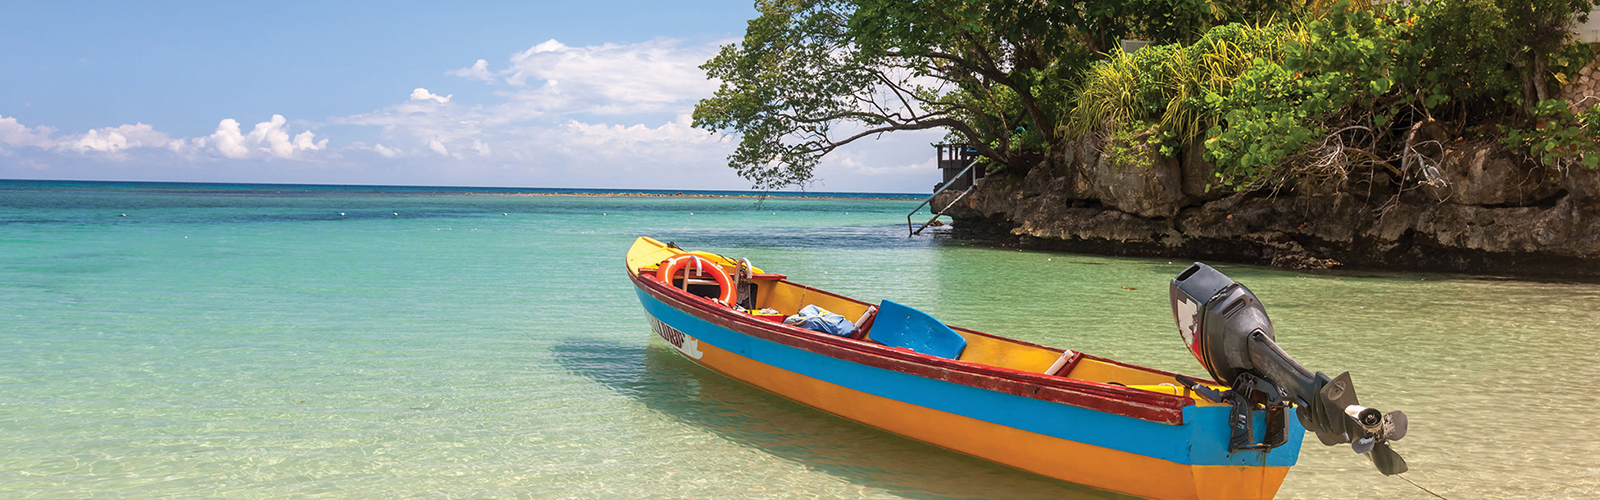 Delta Vacations Jamaica